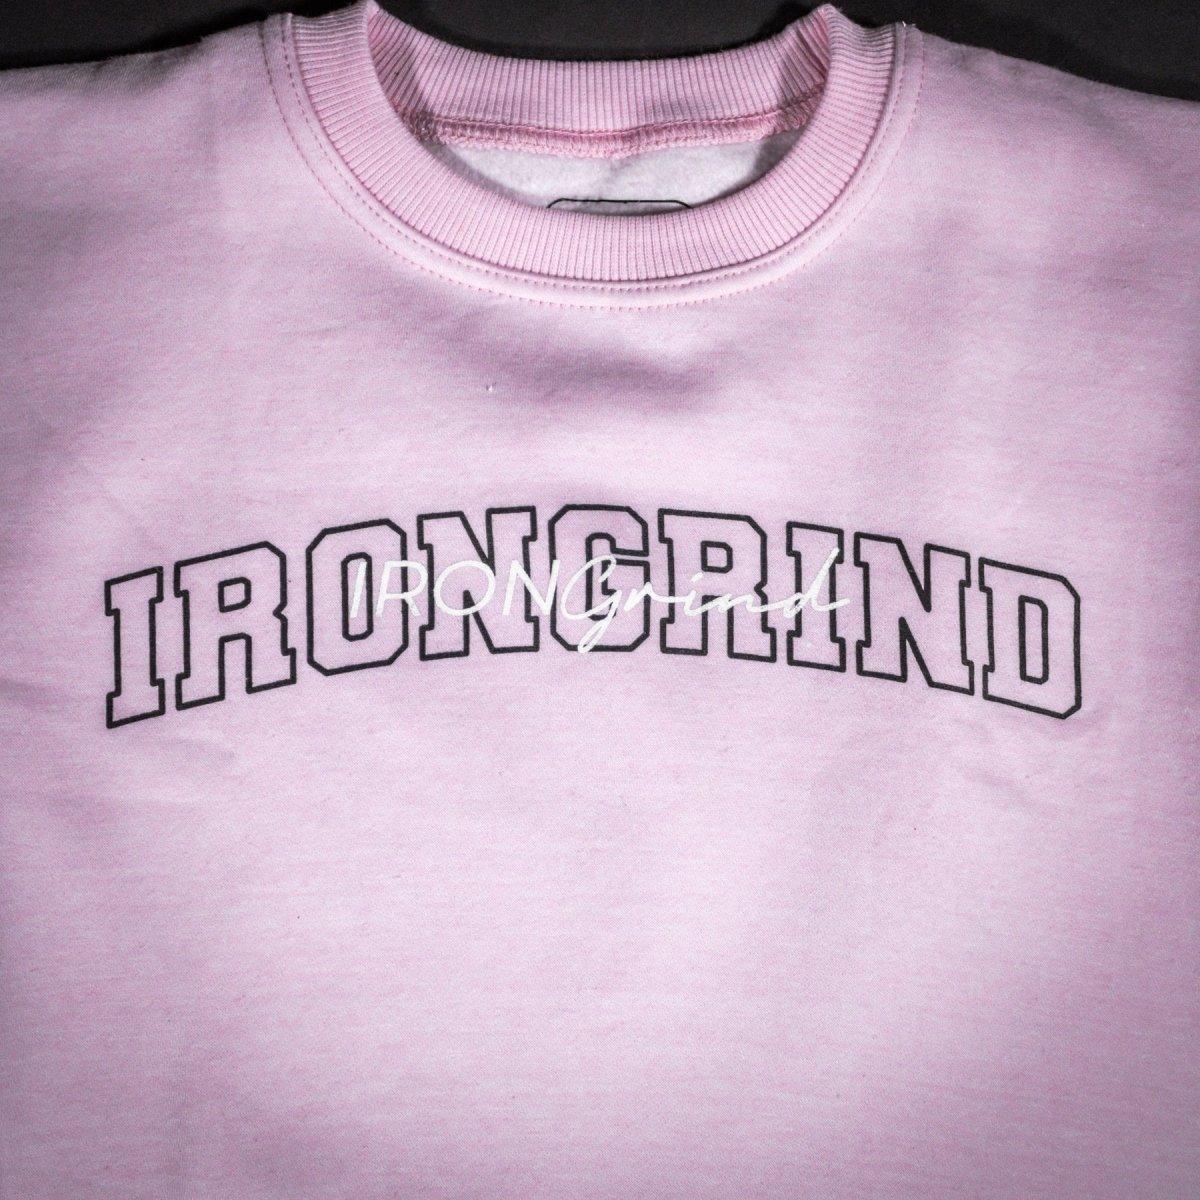 Versatility Crop Top Crewneck - Veiled Rose - IronGrind Athletics - activewear - gymshark - alphalete